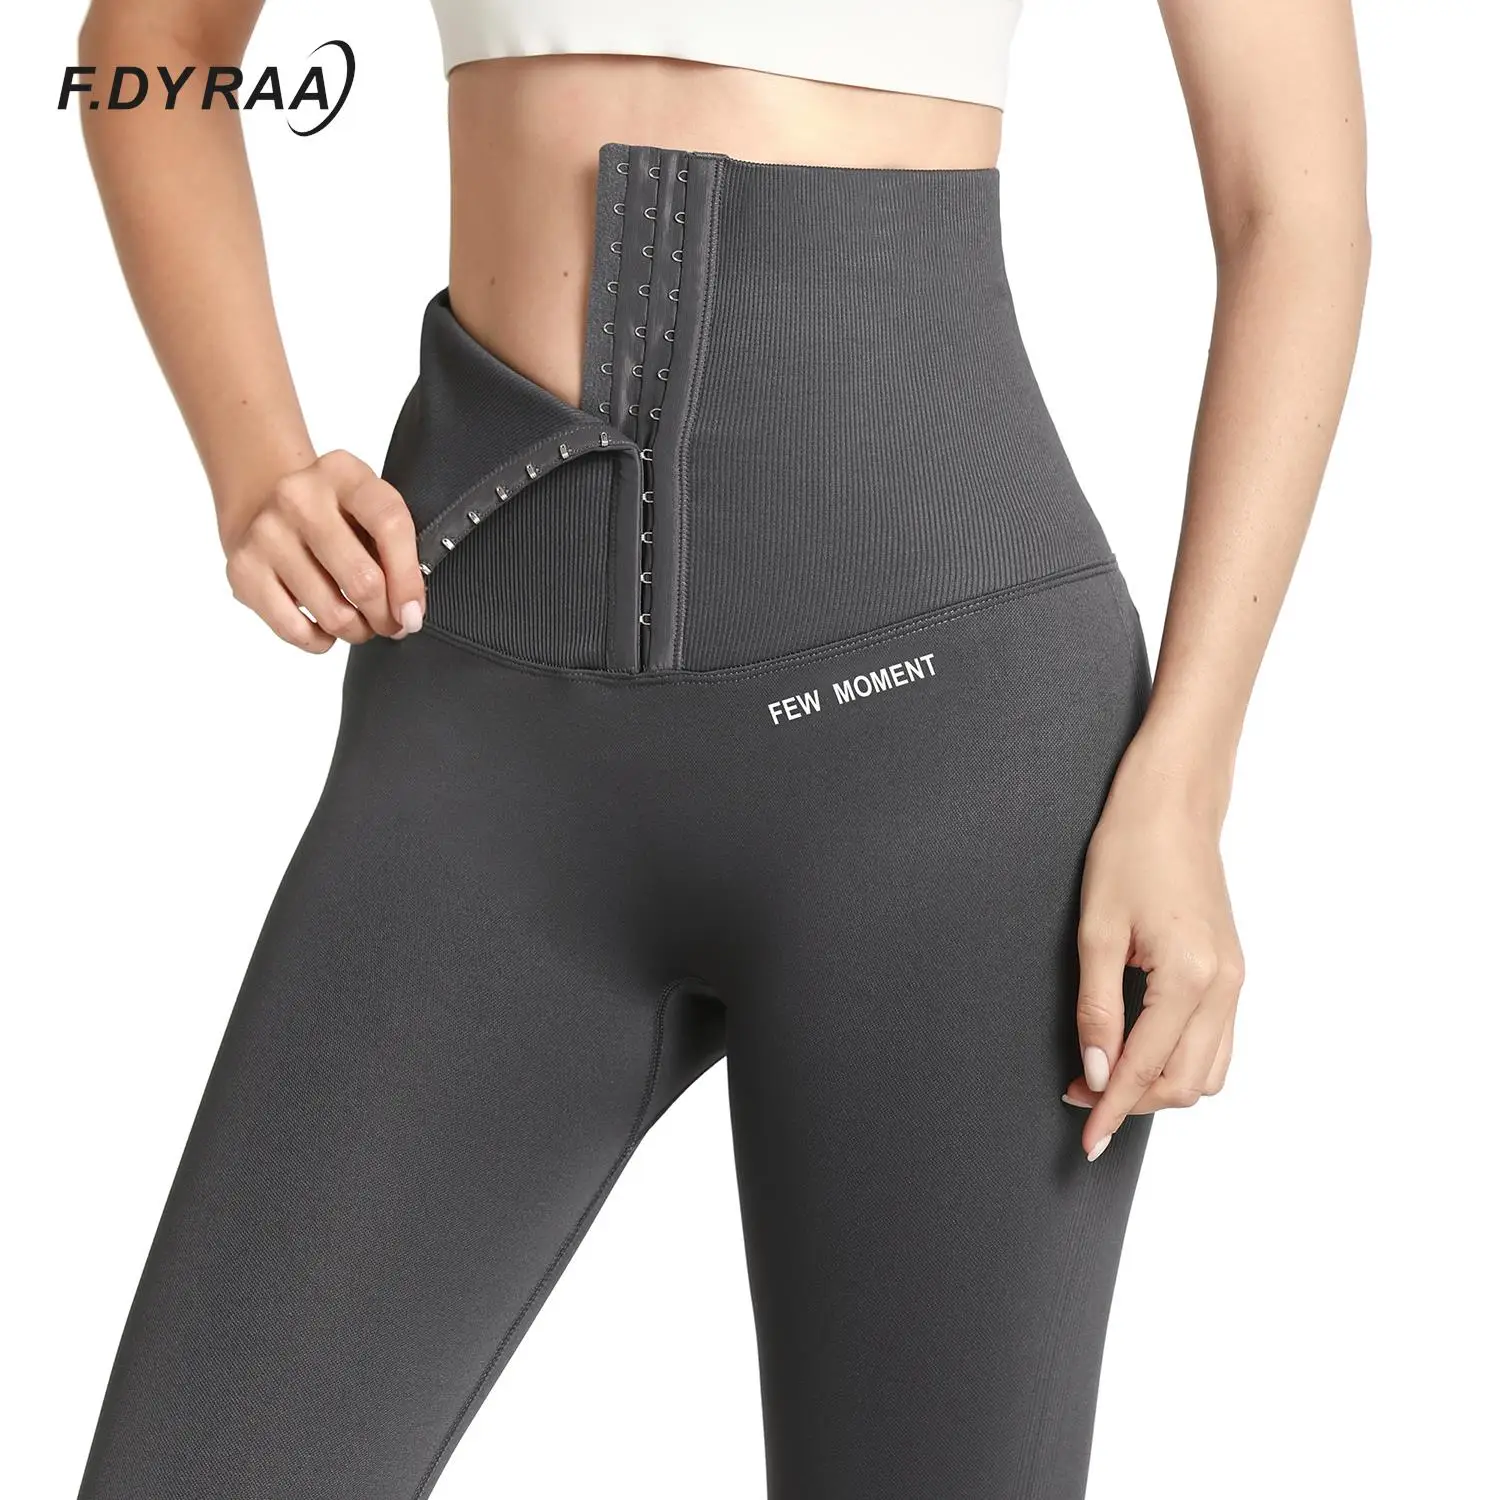 

F.DYRAA High Waist Tights Women Yoga Pants Fitness Gym Workout Seamless Sports Leggings Black Running Activewear Trousers Female